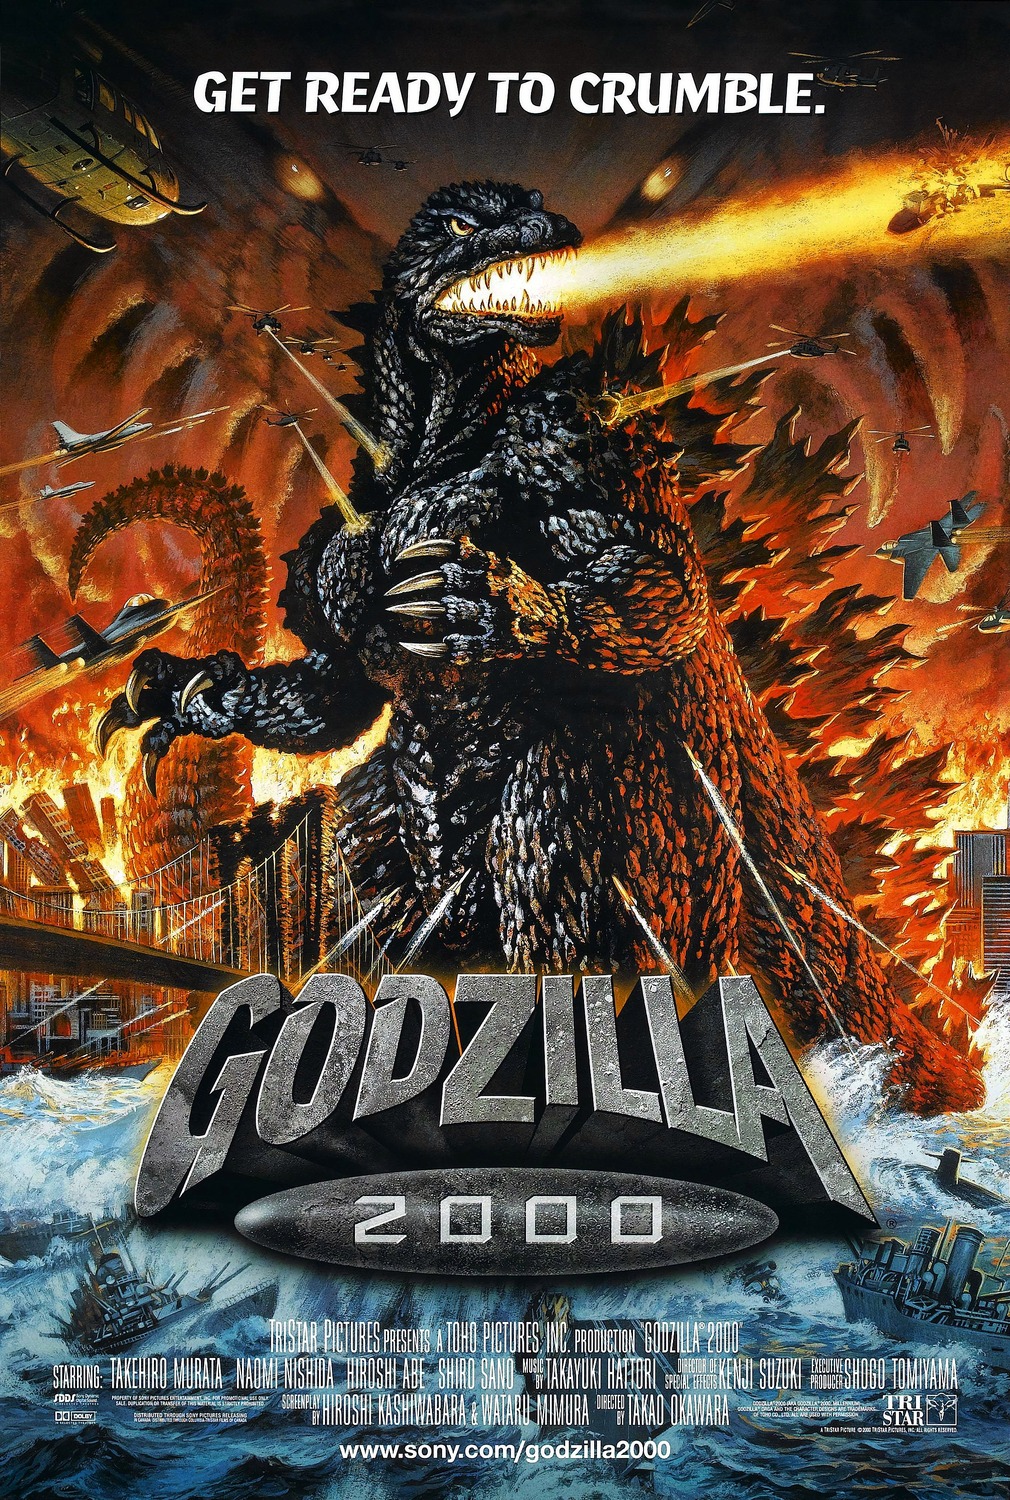 Extra Large Movie Poster Image for Godzilla 2000 